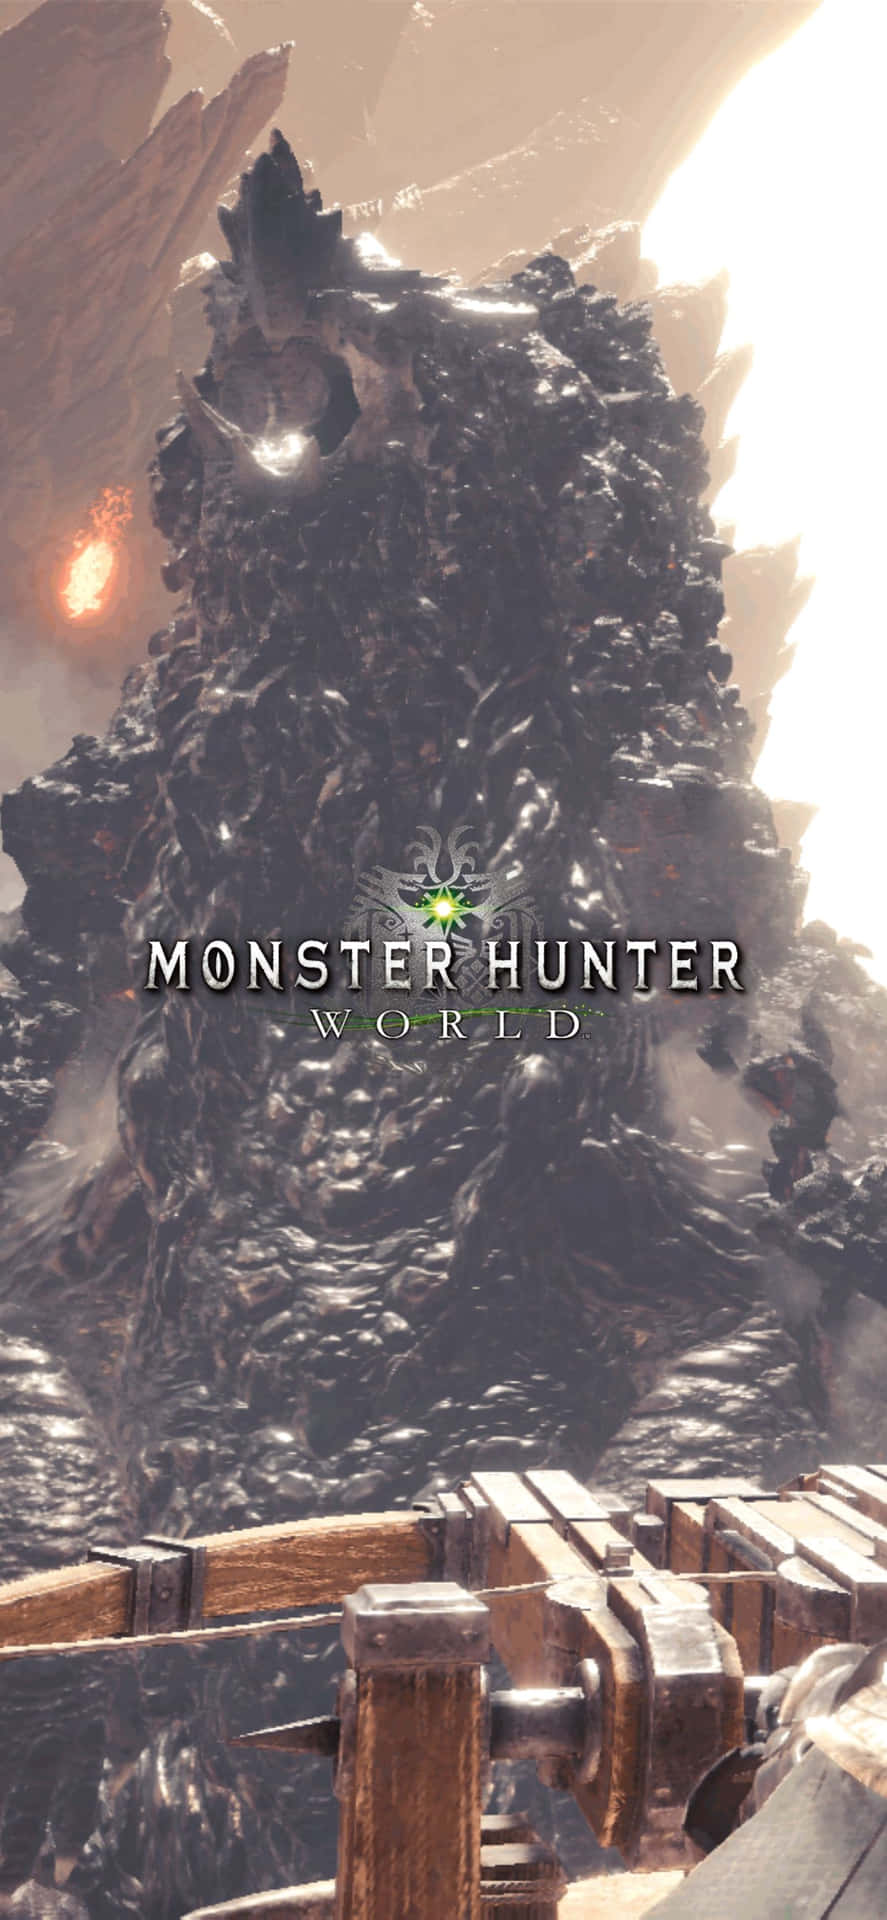 iPhone XS Max Black Rocks Monster Hunter World Background